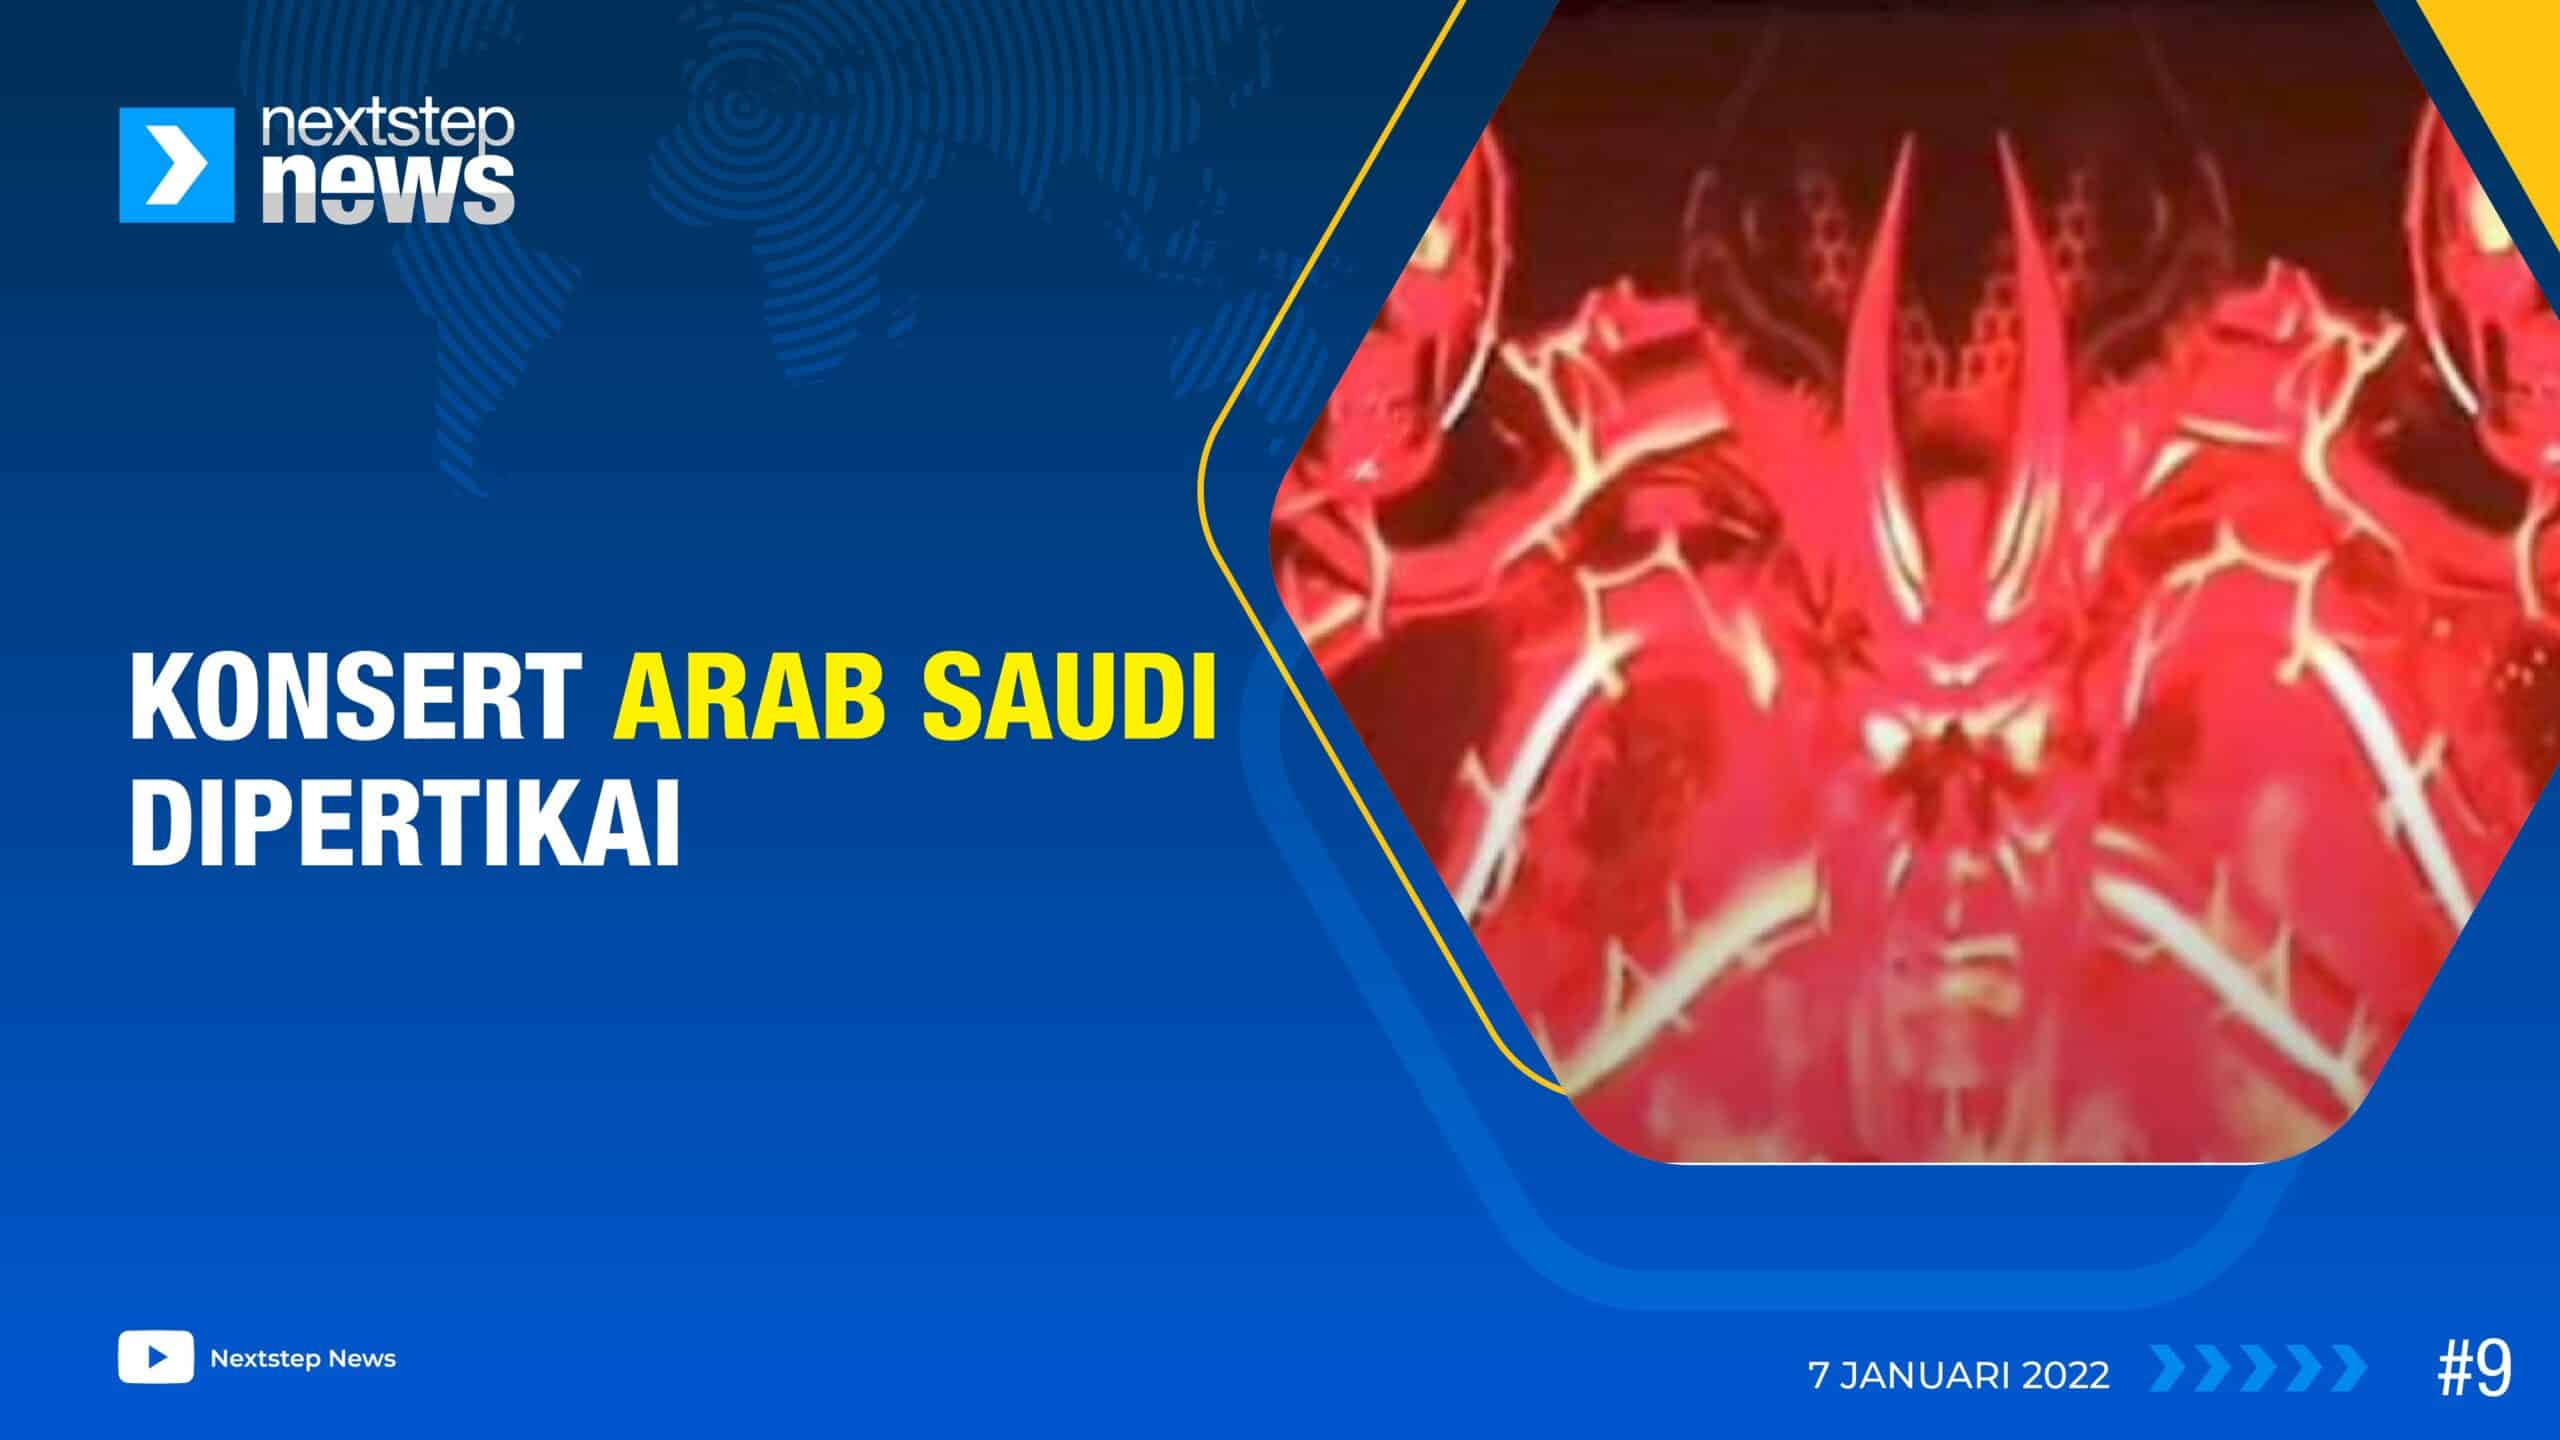 Arab saudi di konsert partners.dugout.com: Konsert